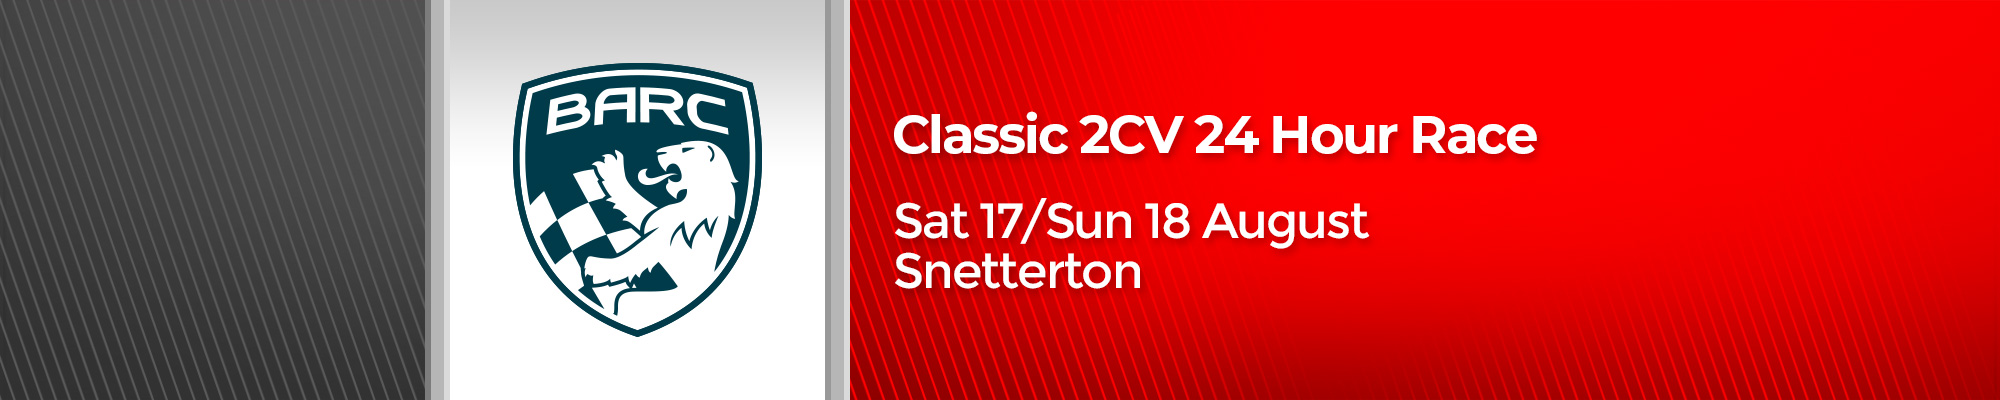 Classic 2CV 24 Hour Race